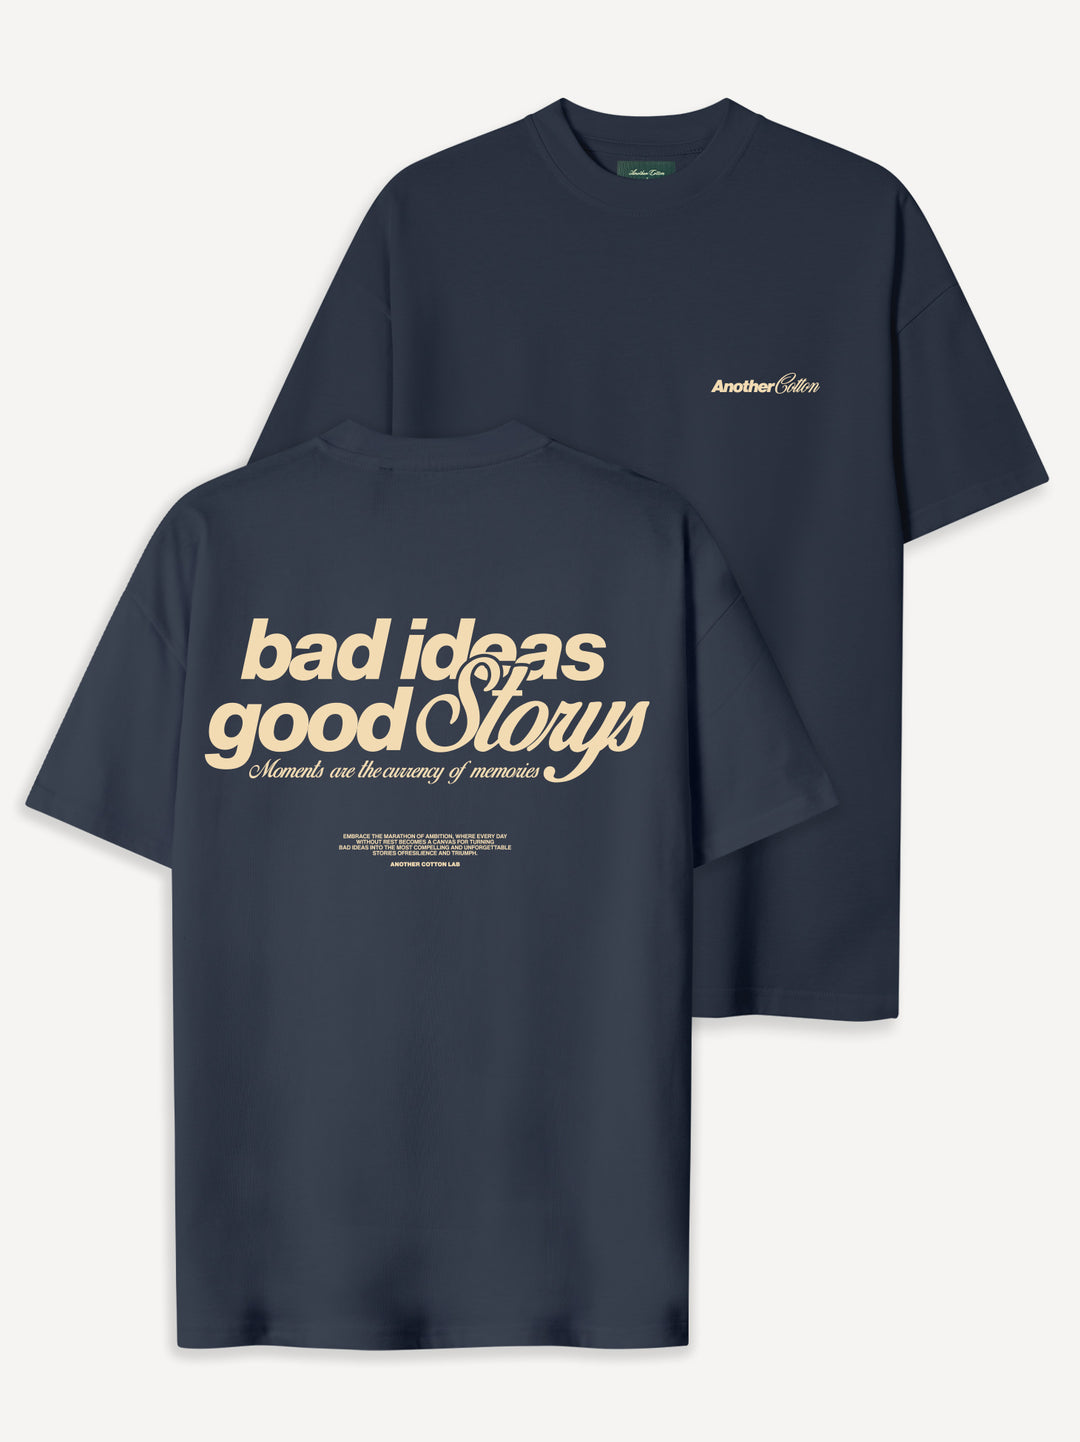 Bad Ideas Good Storys T-Shirt